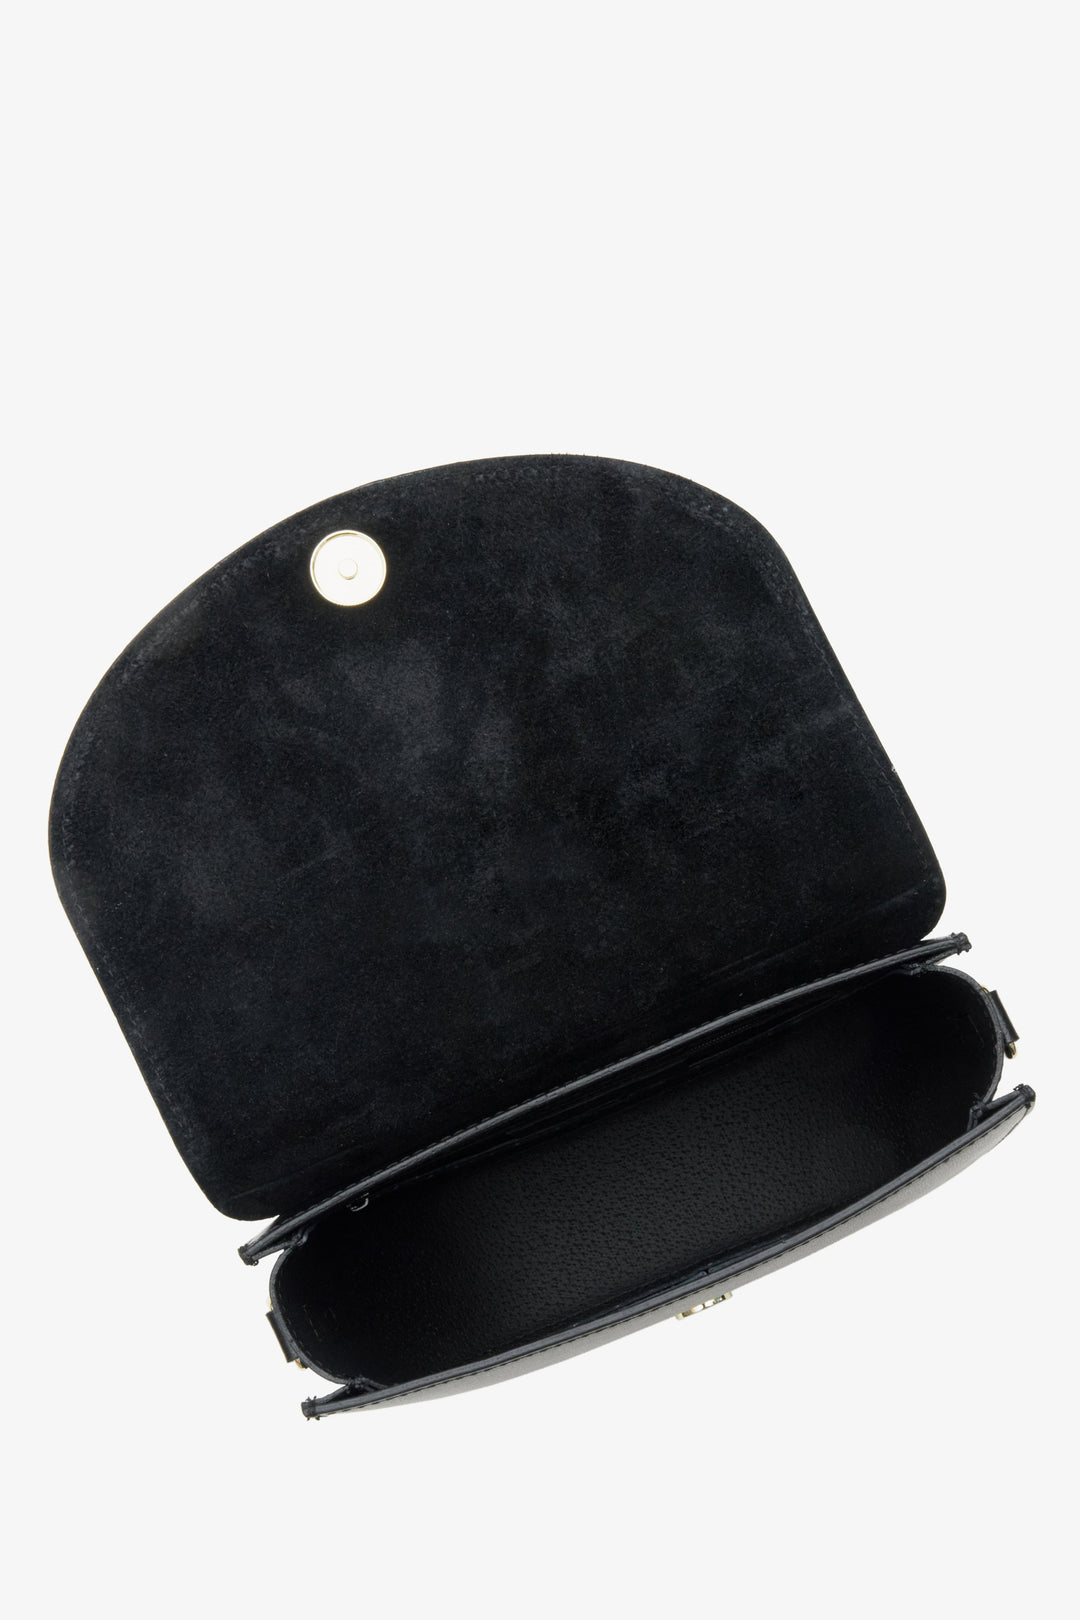 Women's black Estro handbag made of genuine leather - close-up on the interior of the model.